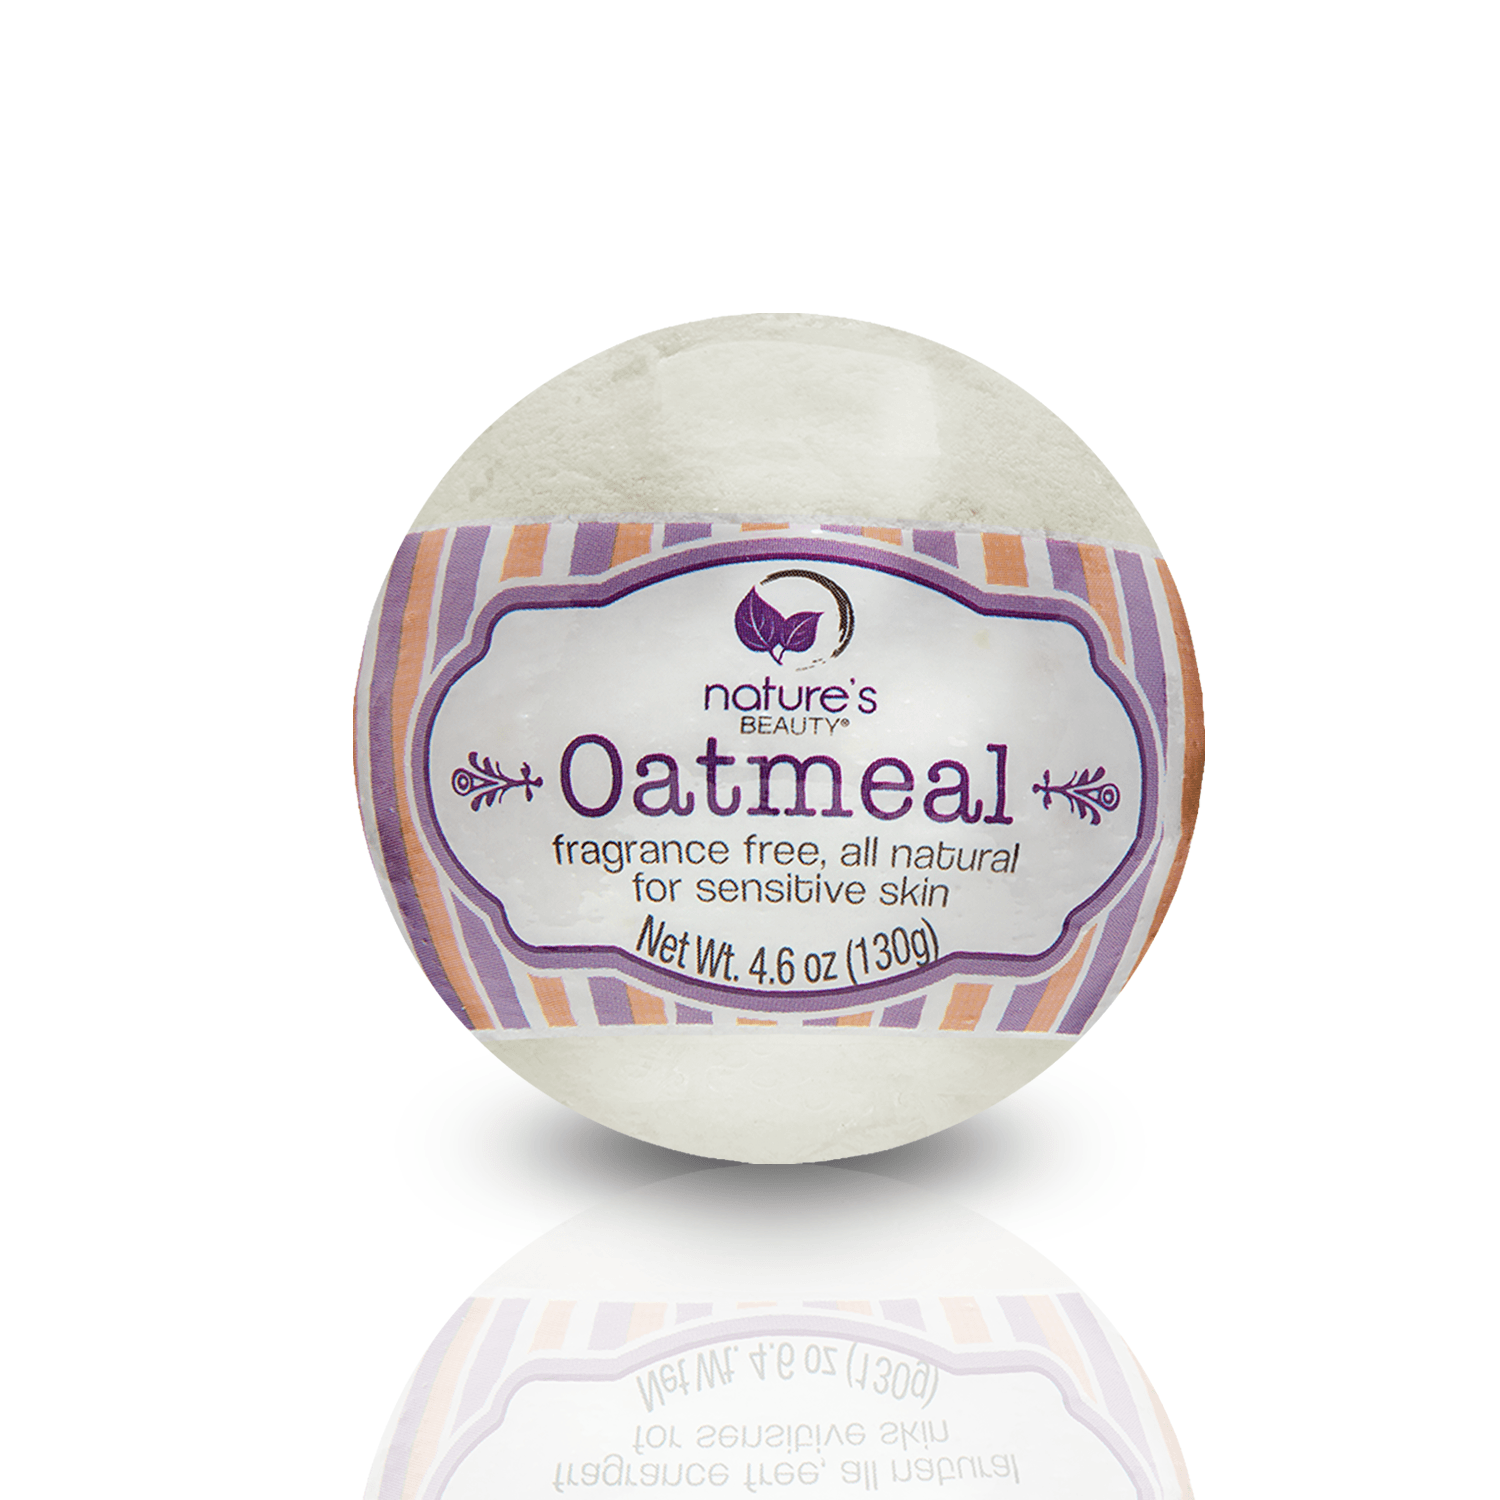 Oatmeal Fragrance-Free Nature's Beauty Body Care Single 